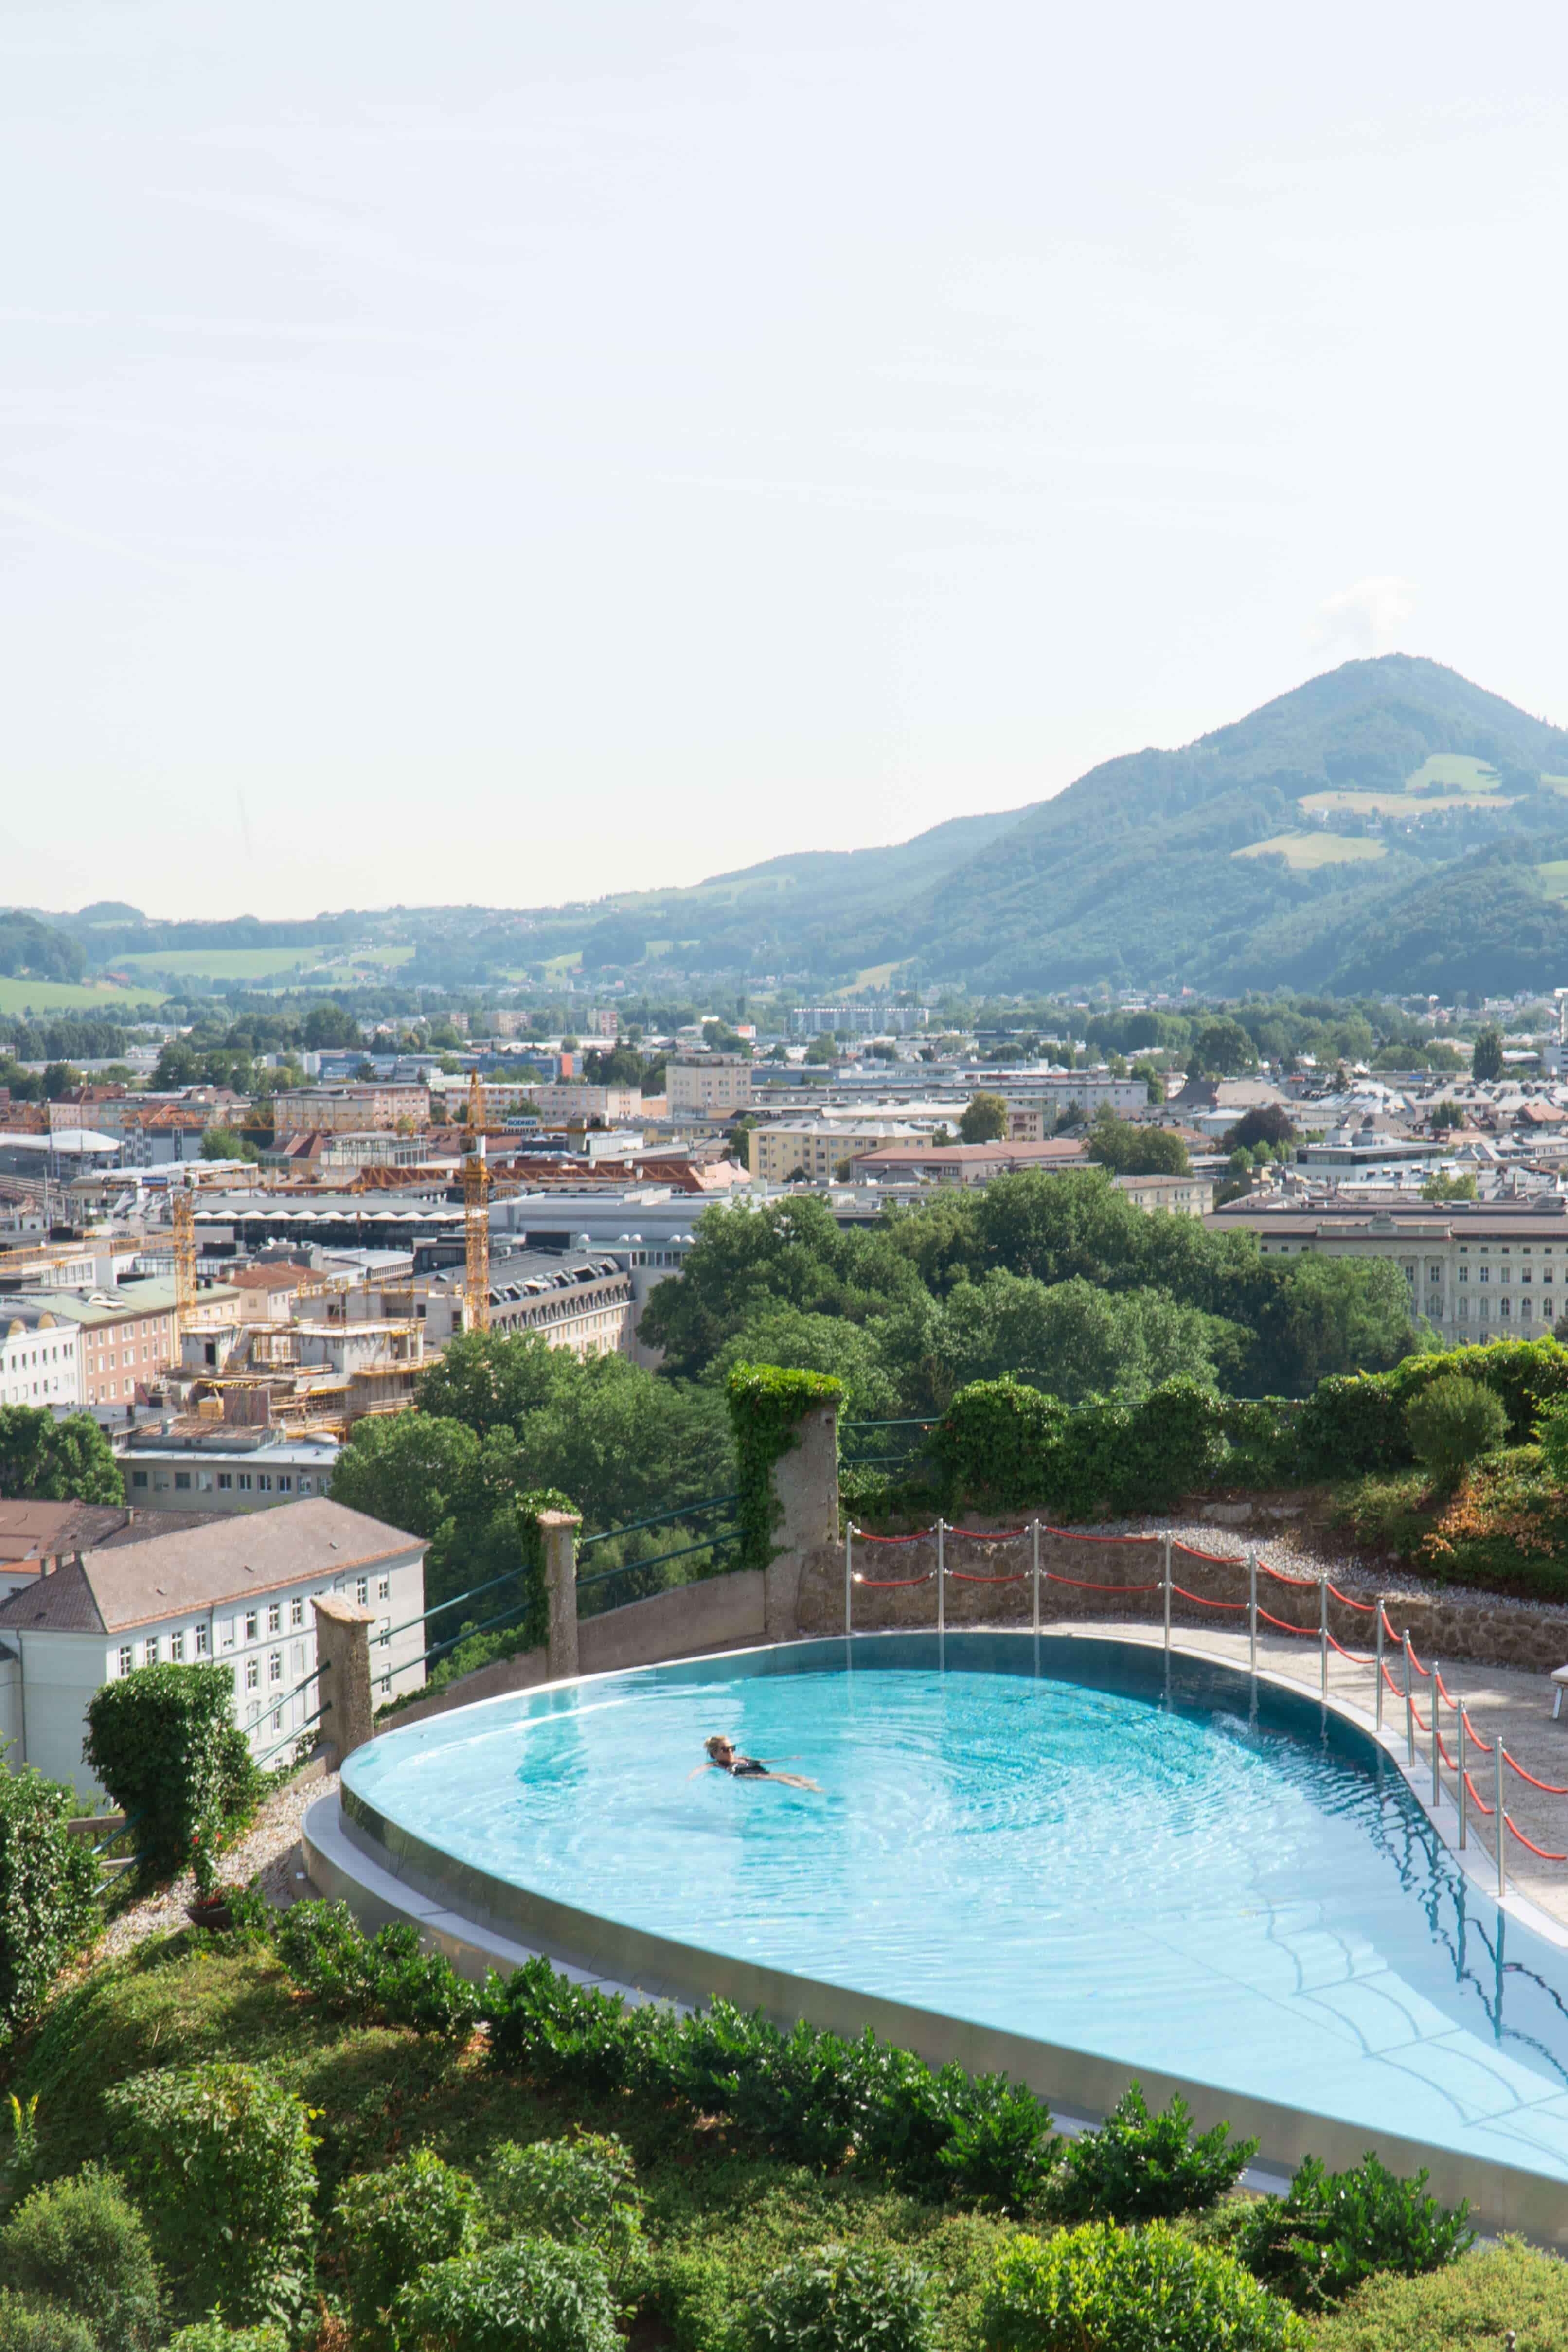 How to Spend One Day in Salzburg Austria | Pool at Hotel Schloss Mönchstein | The Republic of Rose | #Travel #Salzburg #Austria #Europe